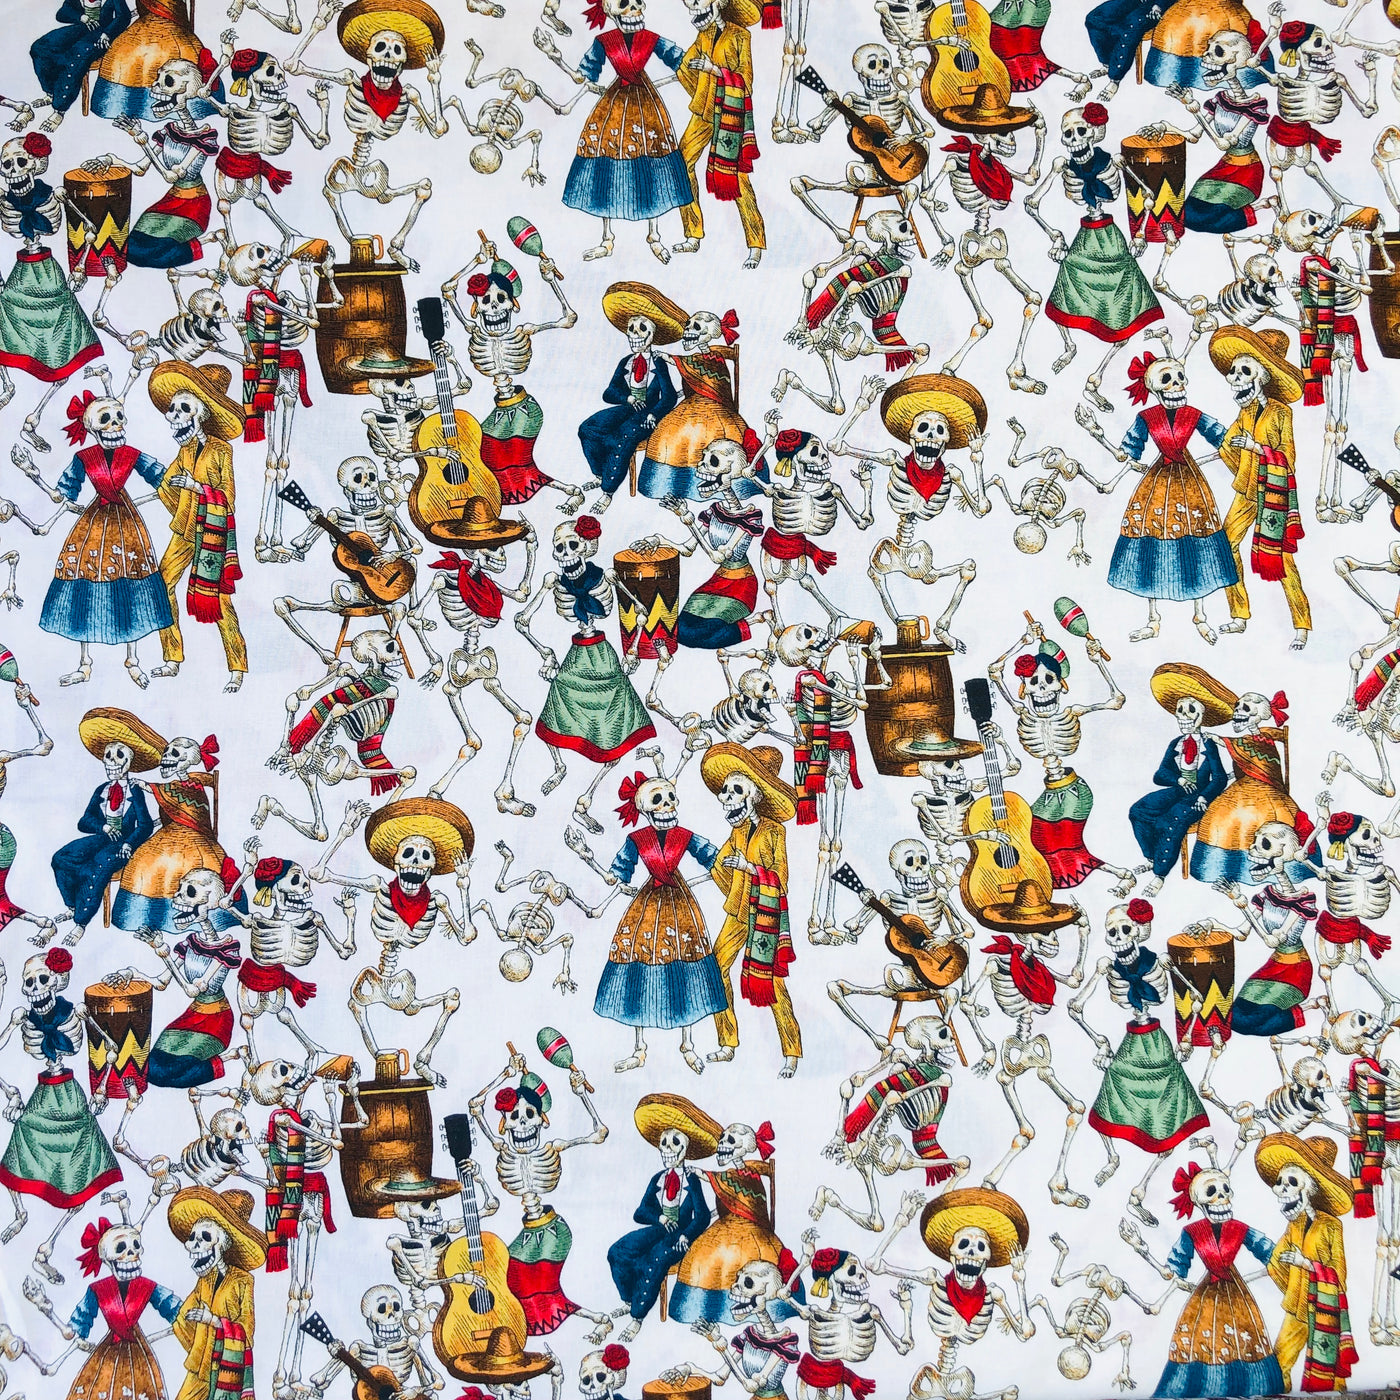 Alexander Henry Fabrics in Fiesta de los Muertos pattern. This pattern has multiple skeletons partying against a white background